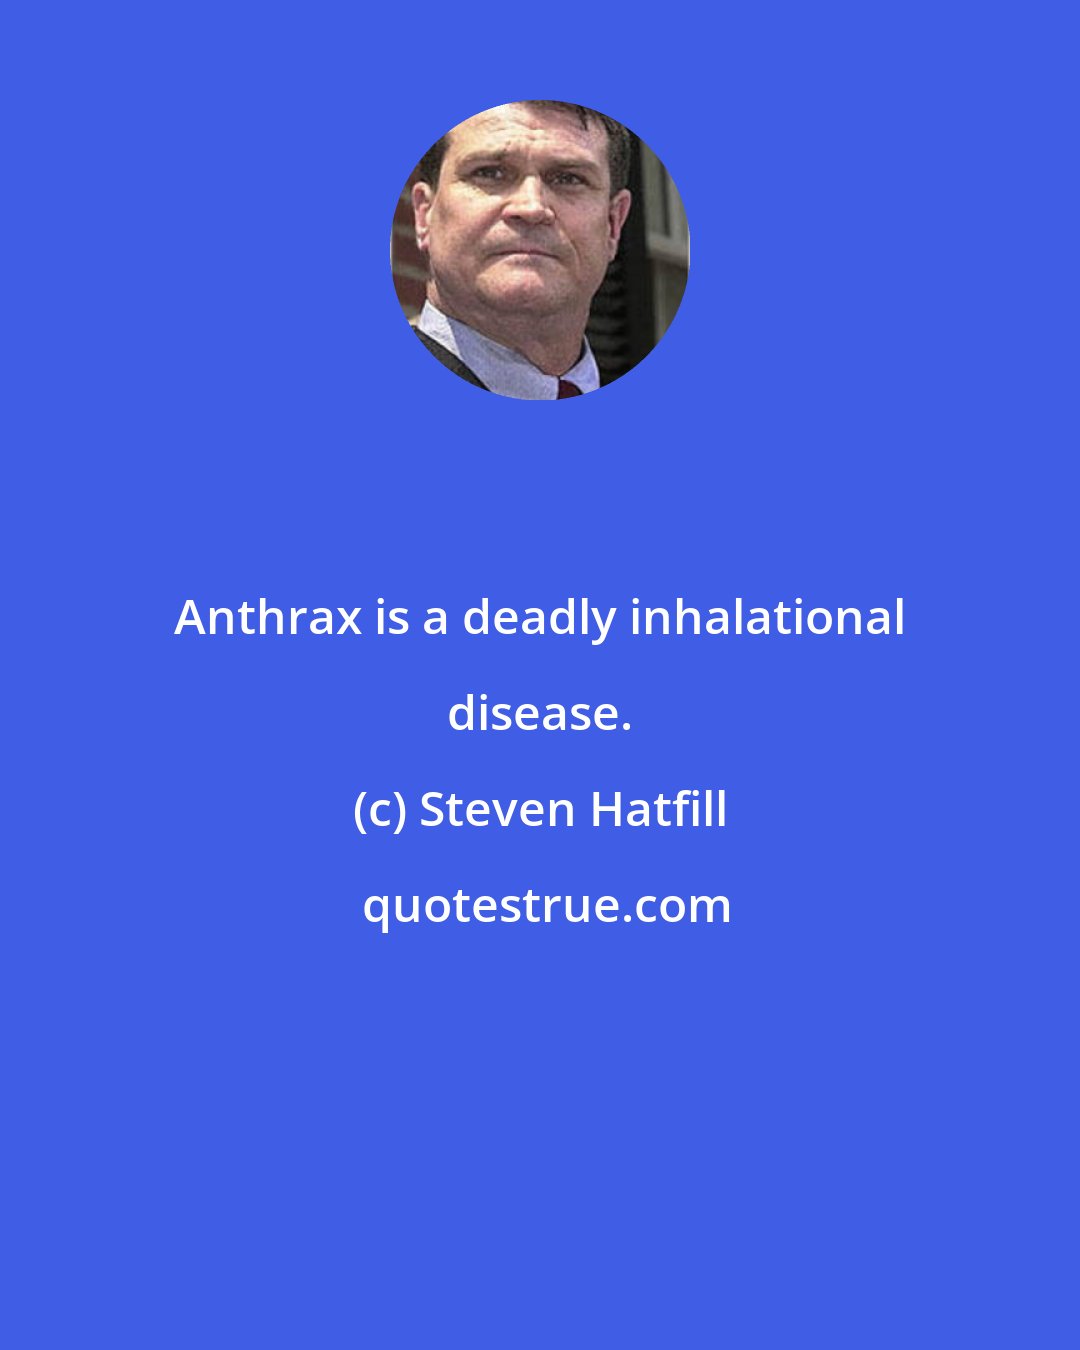 Steven Hatfill: Anthrax is a deadly inhalational disease.